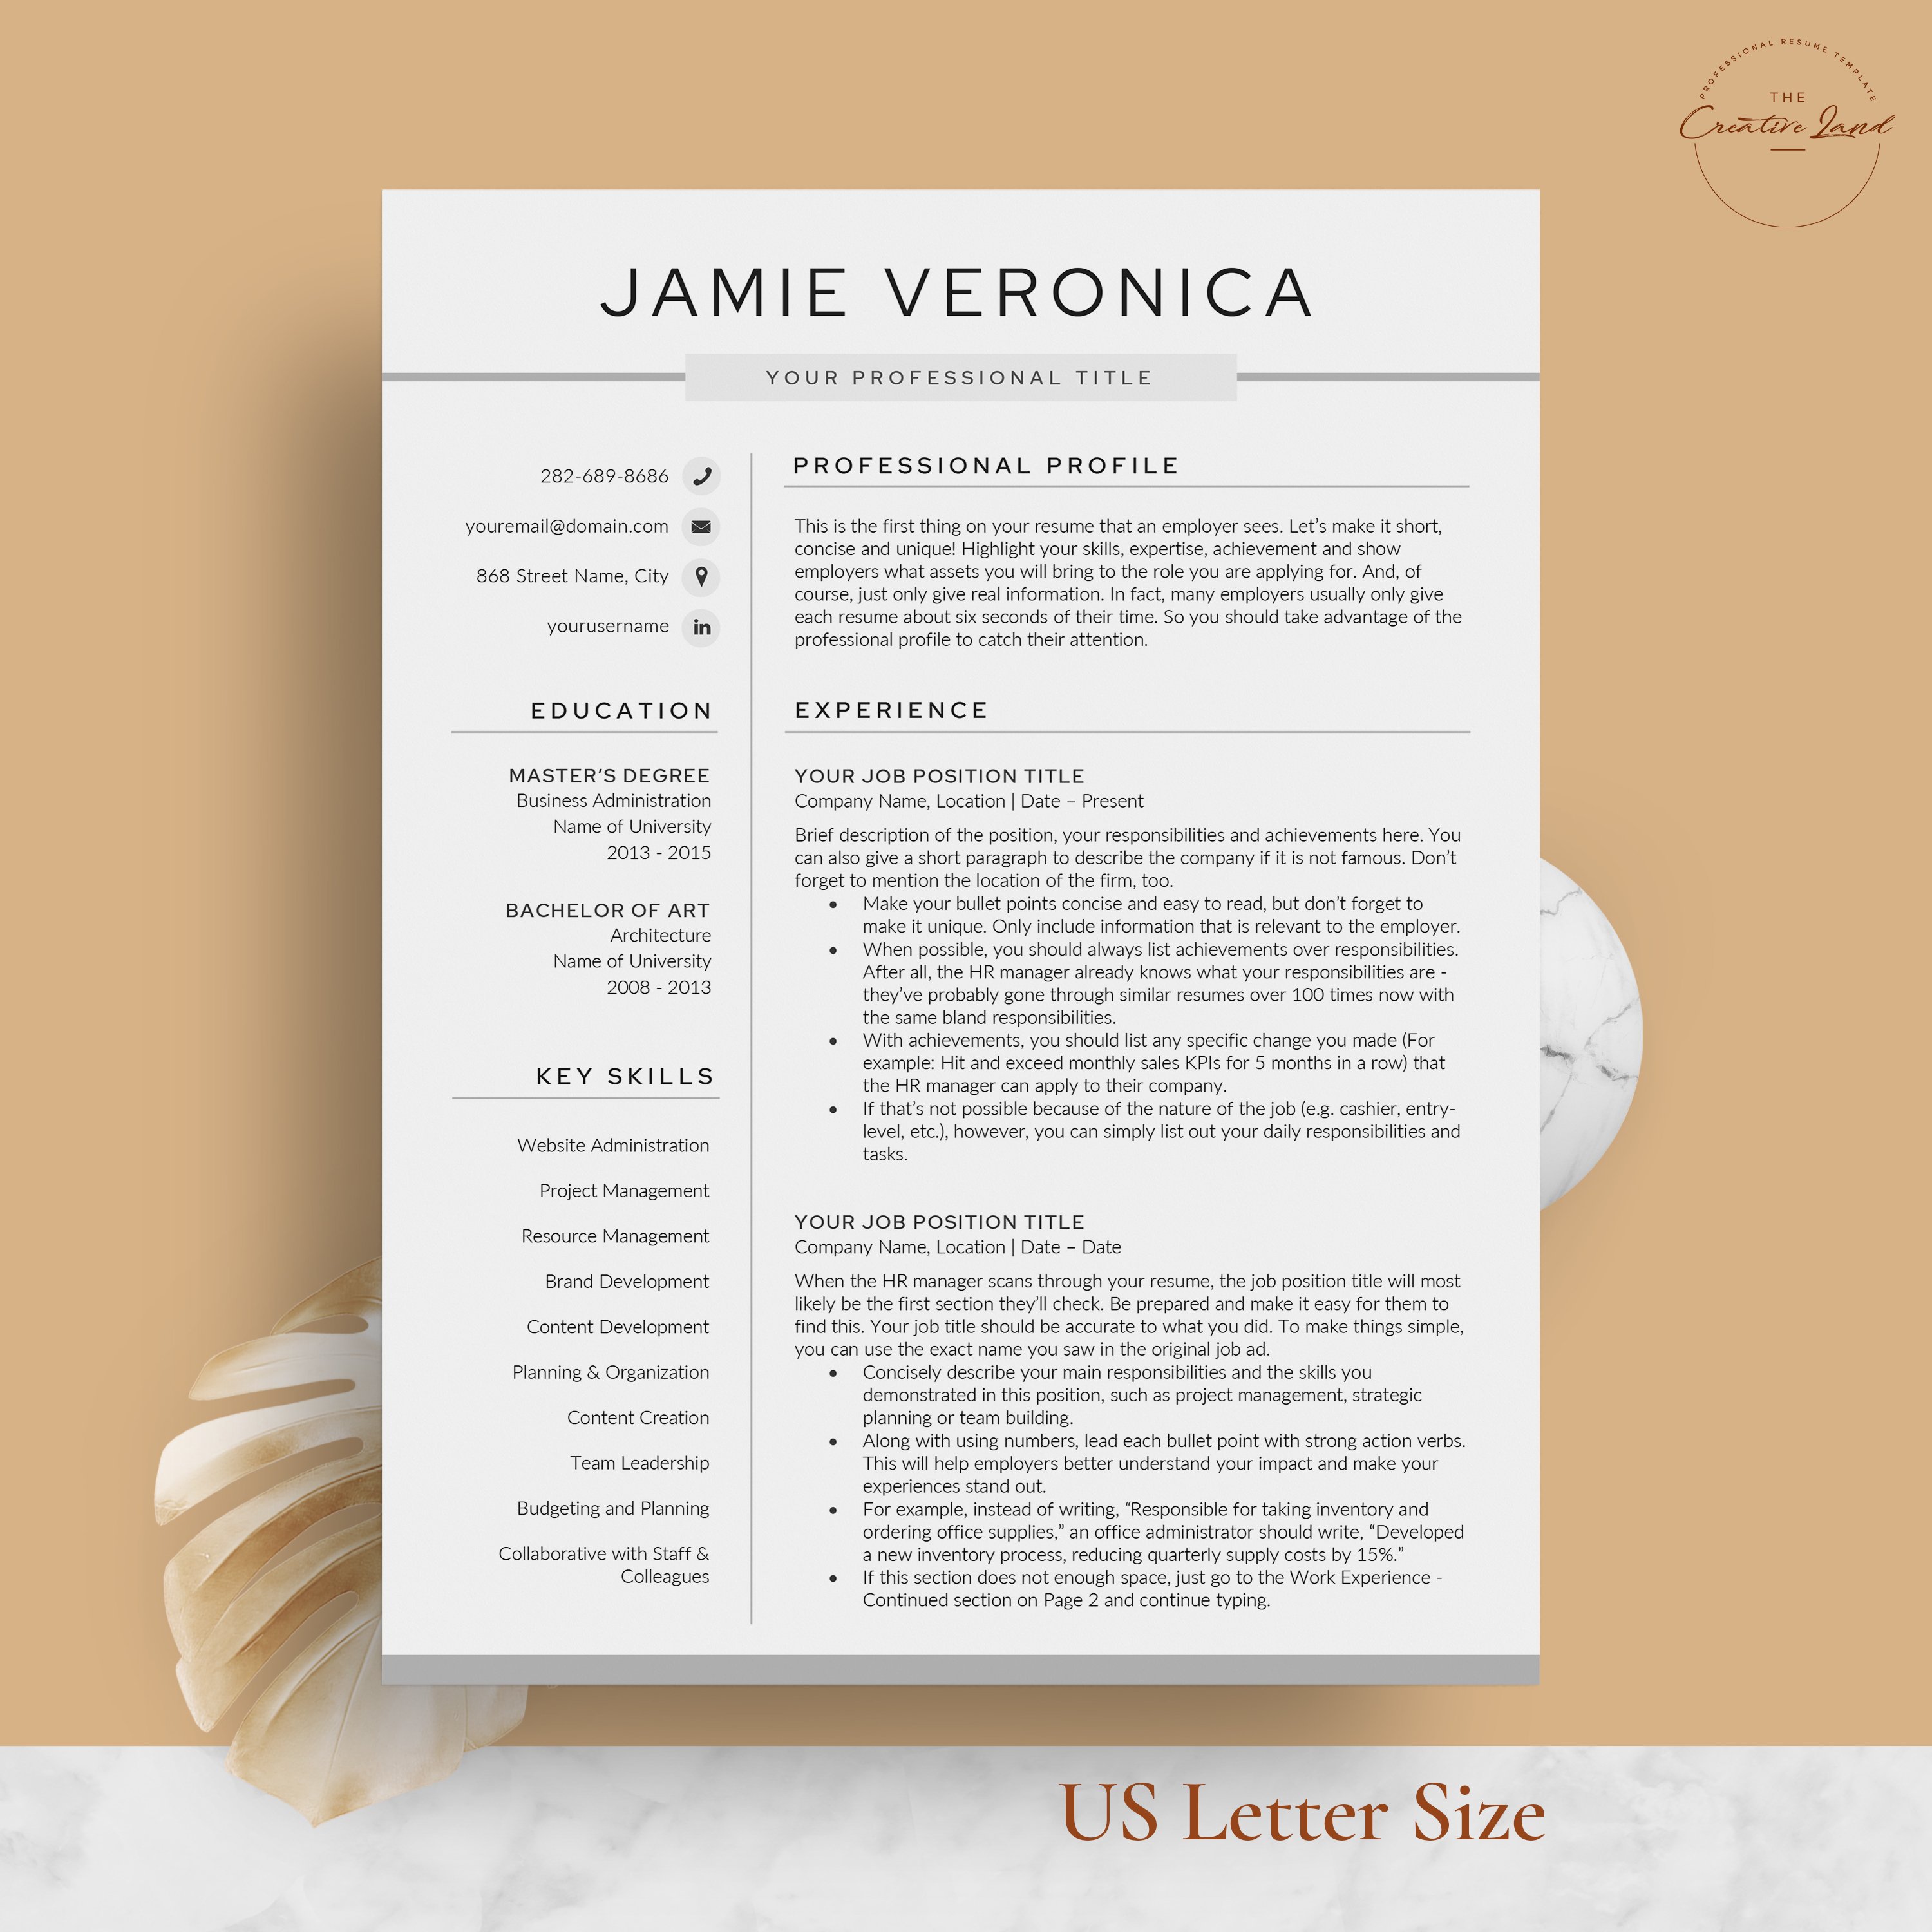 Resume/CV - The Jamie preview image.